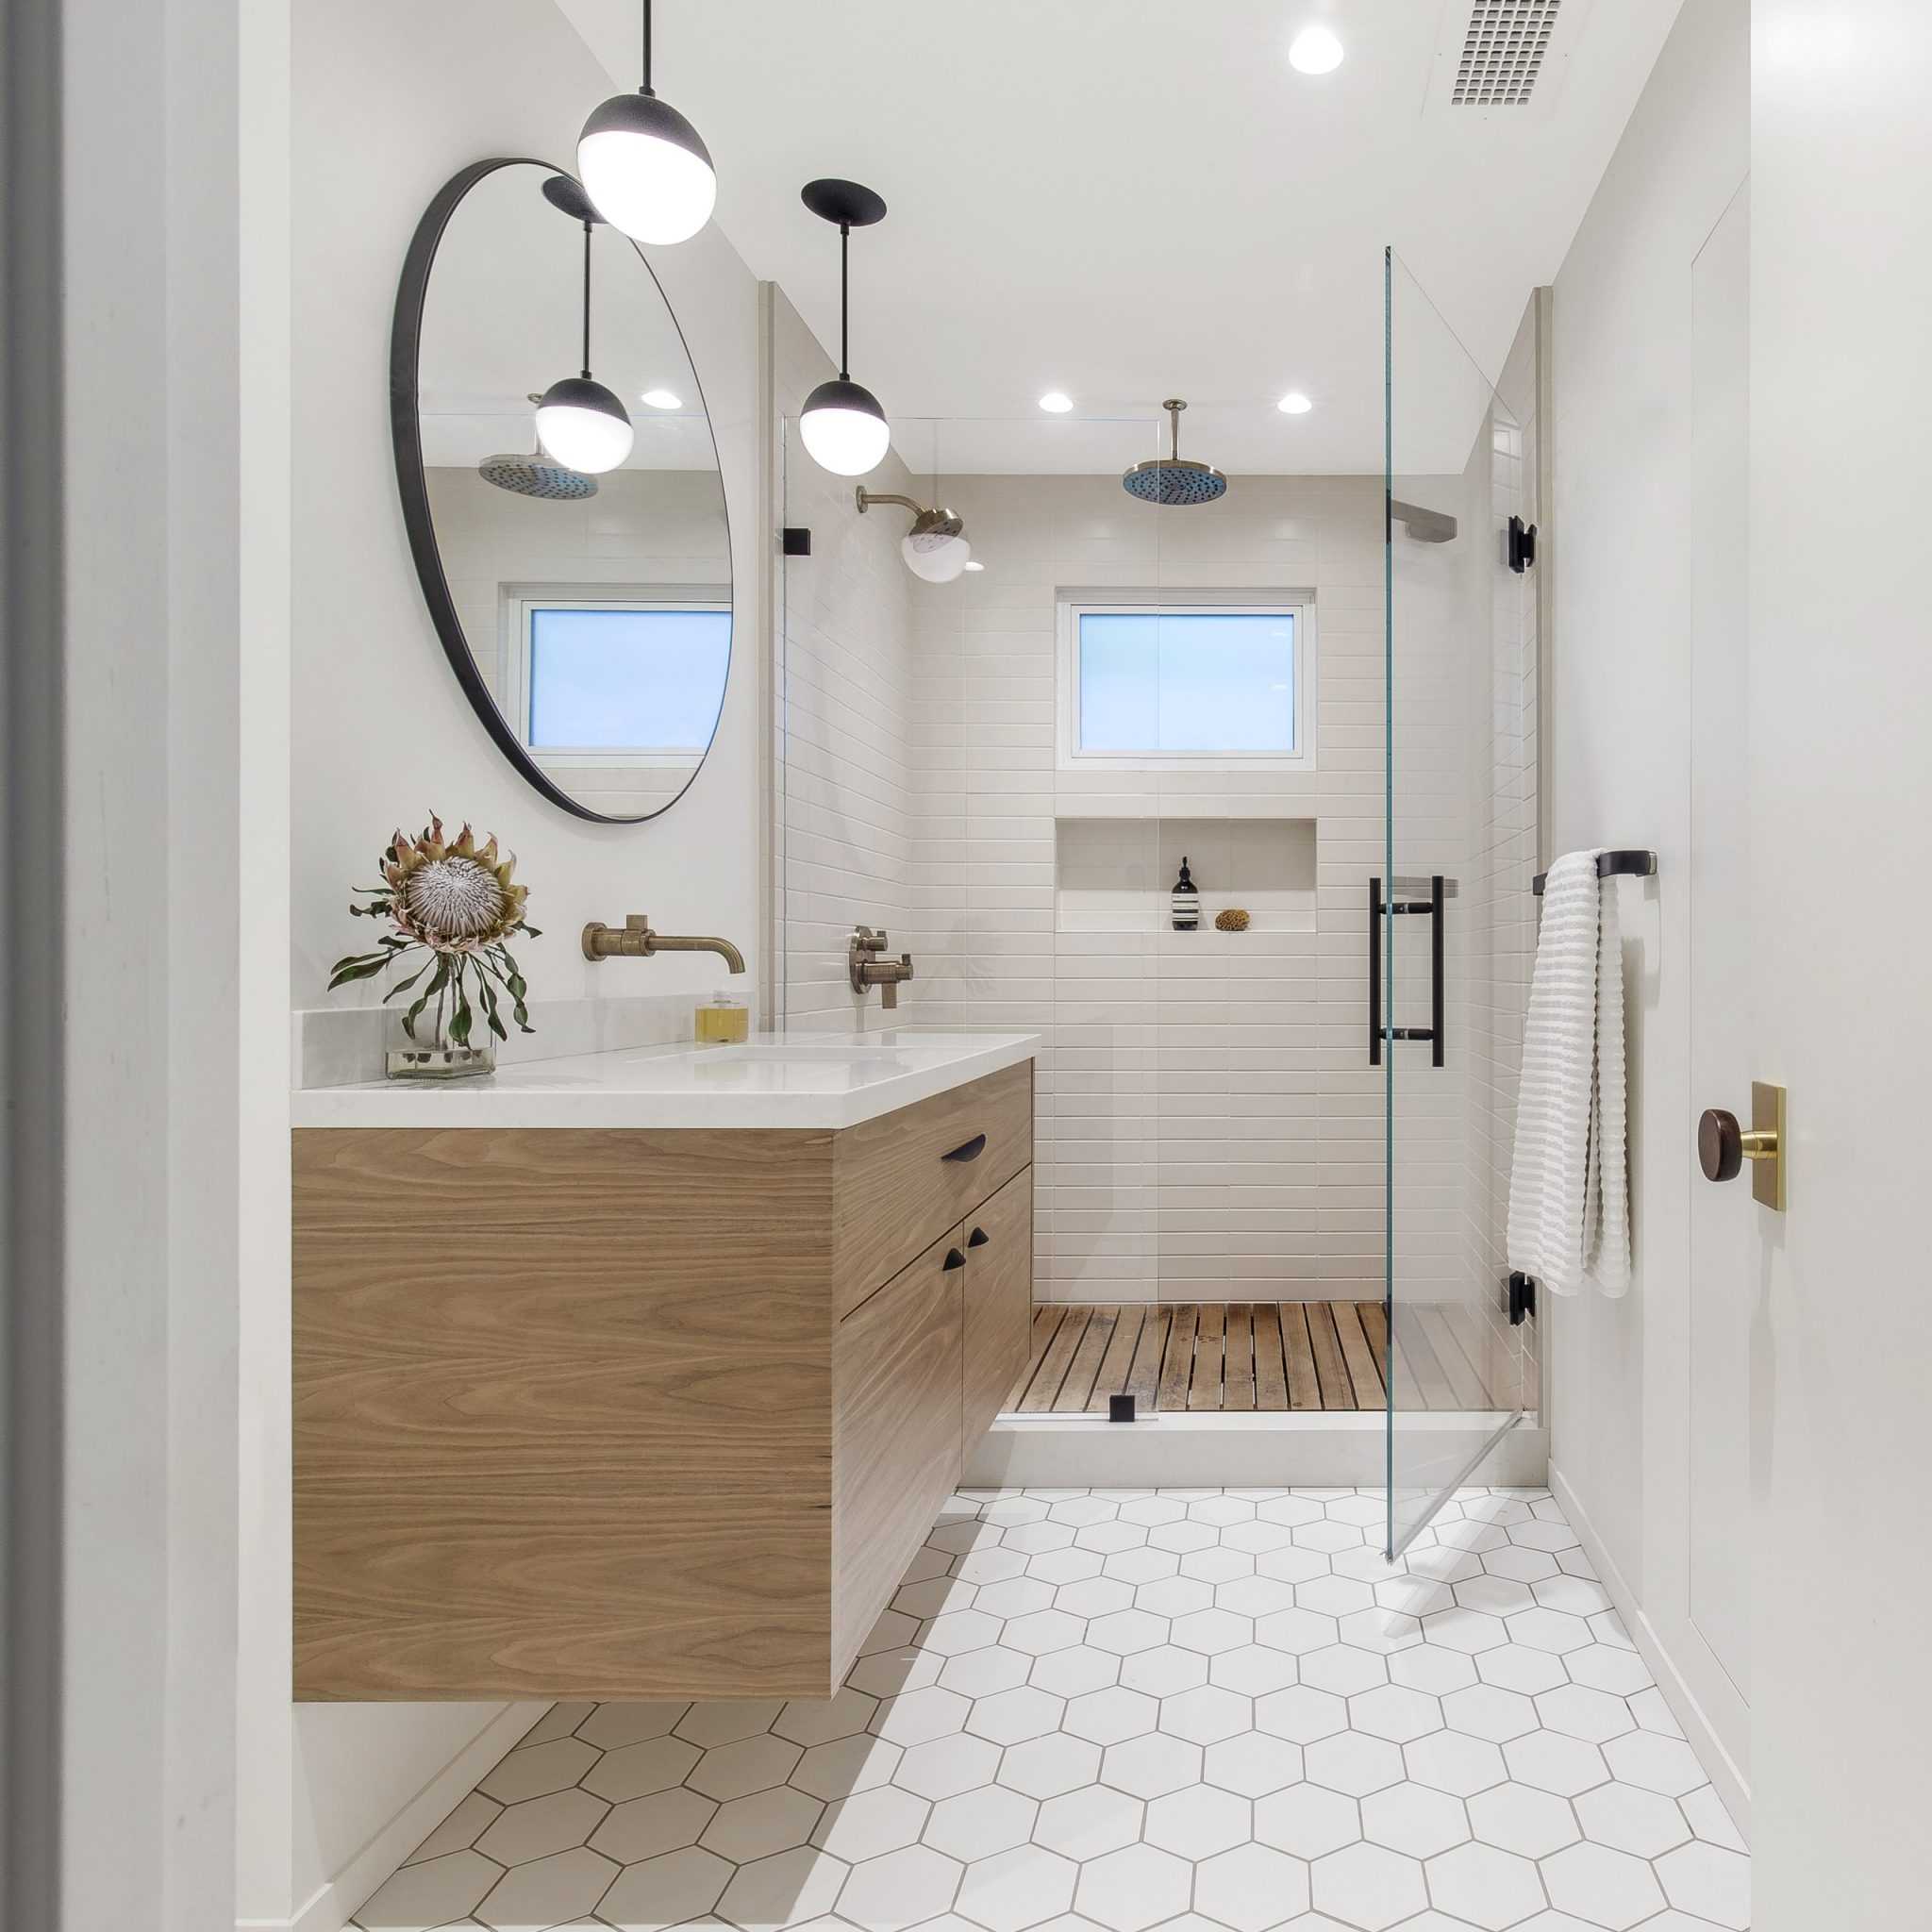 Classic Contemporary Bathroom Ideas - BEST HOME DESIGN IDEAS